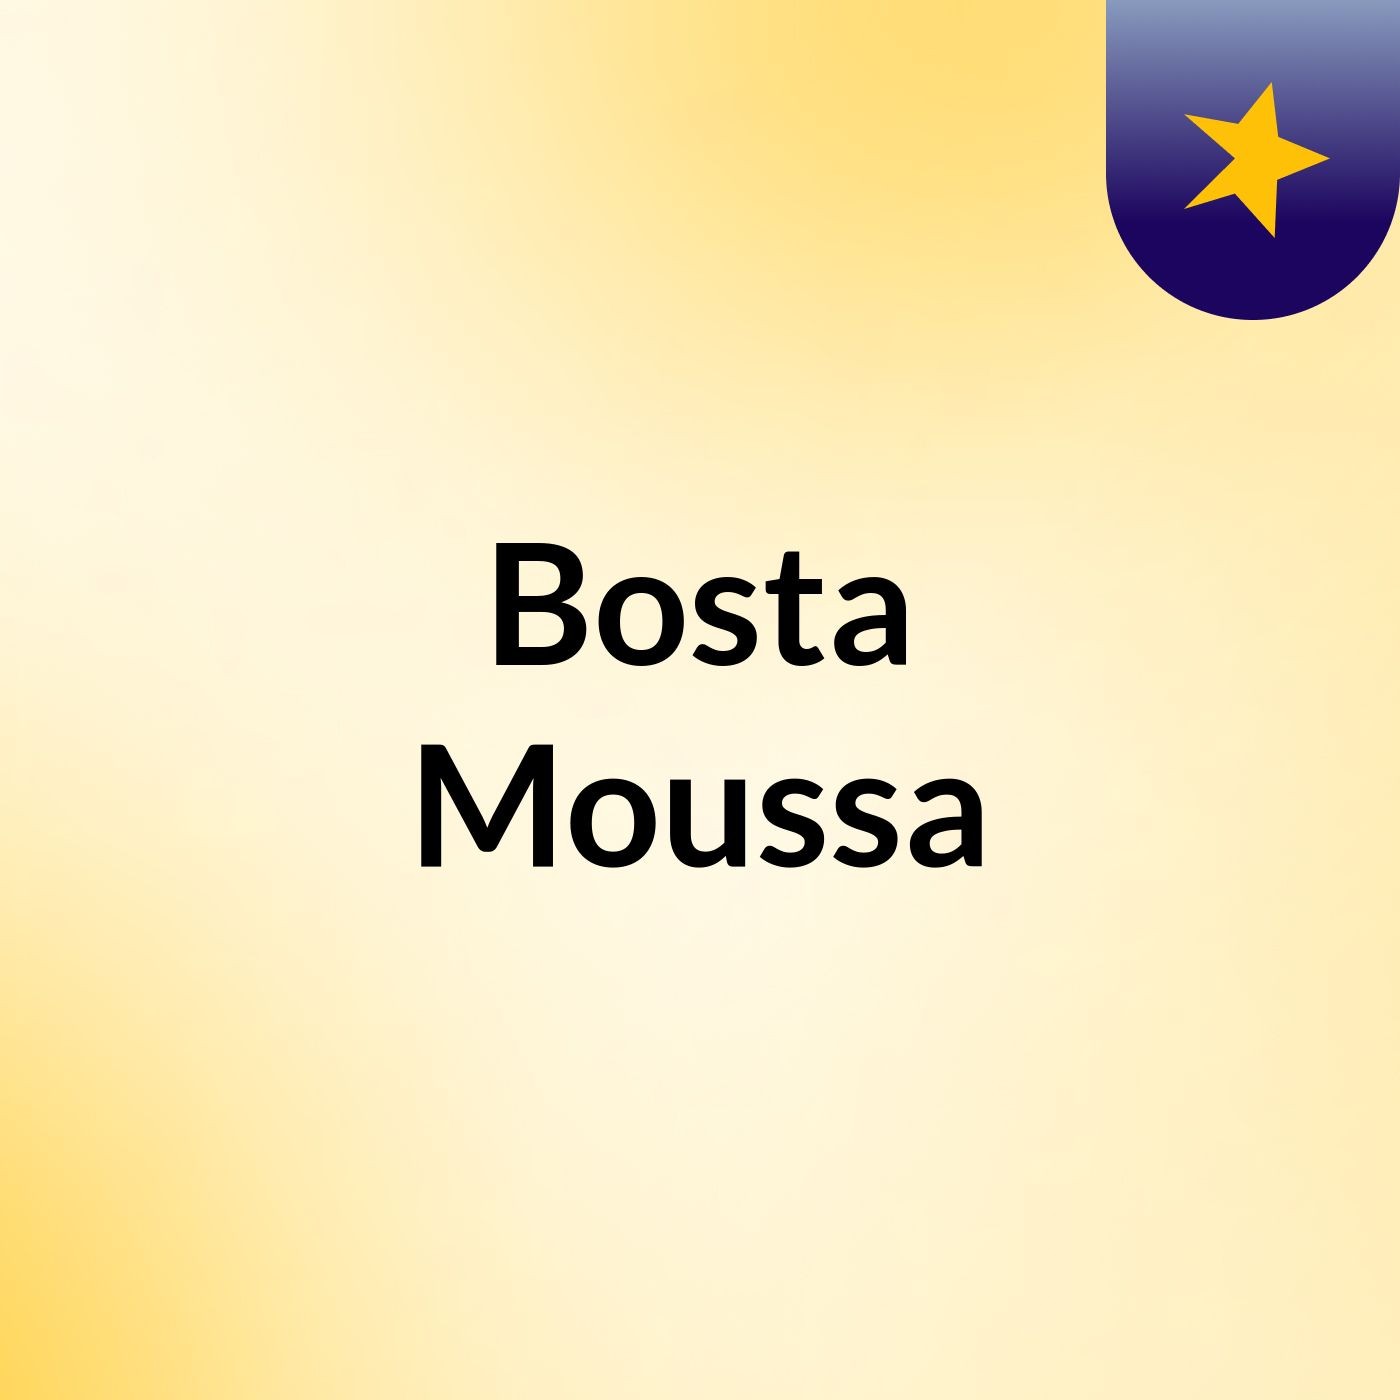 Bosta Moussa